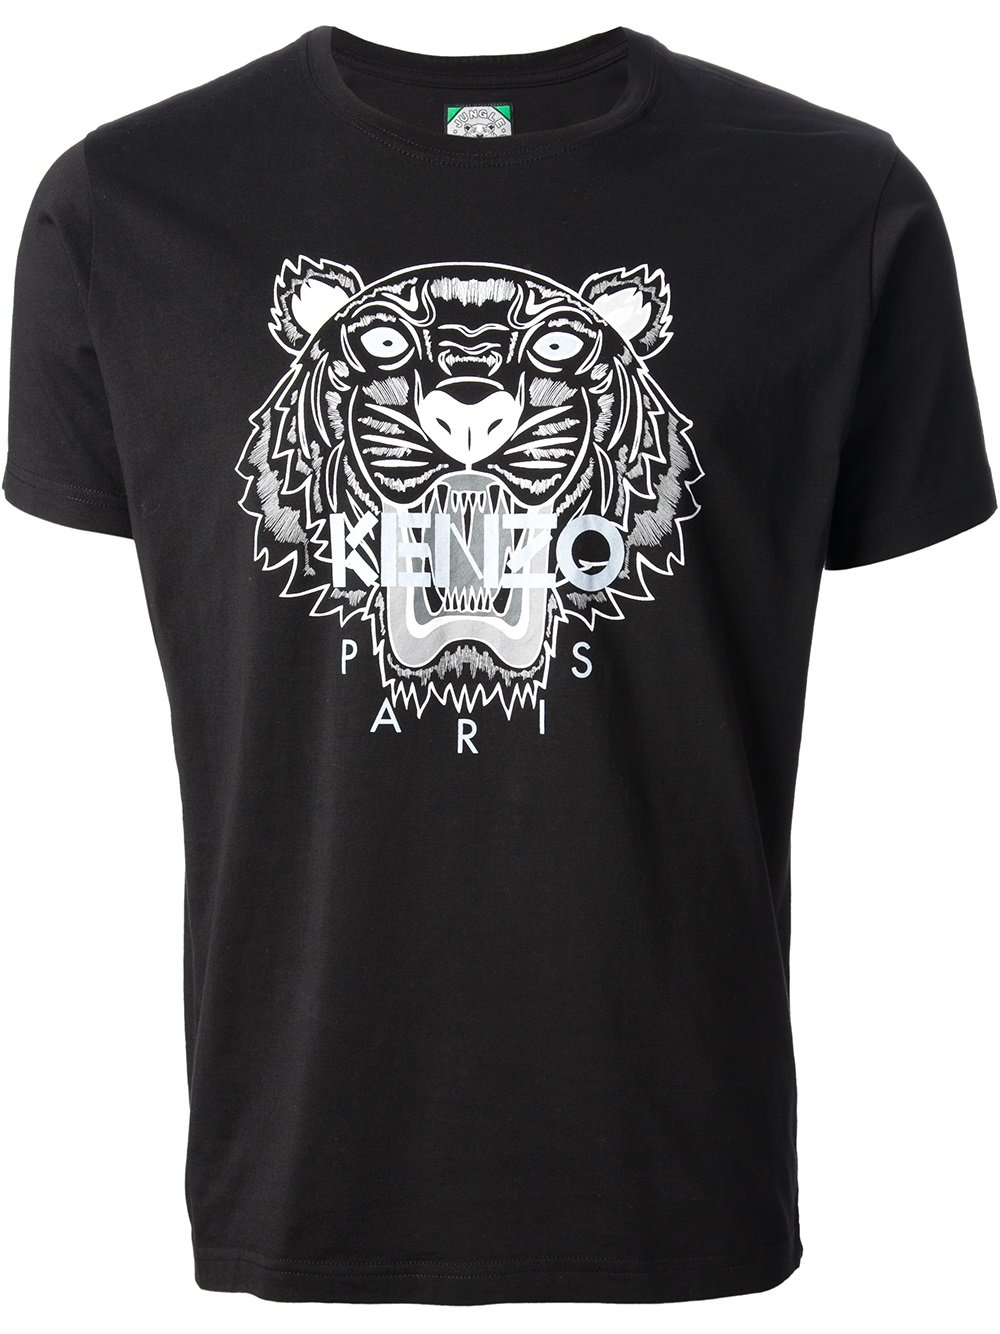 Lyst - Kenzo Tiger T-shirt in Black for Men